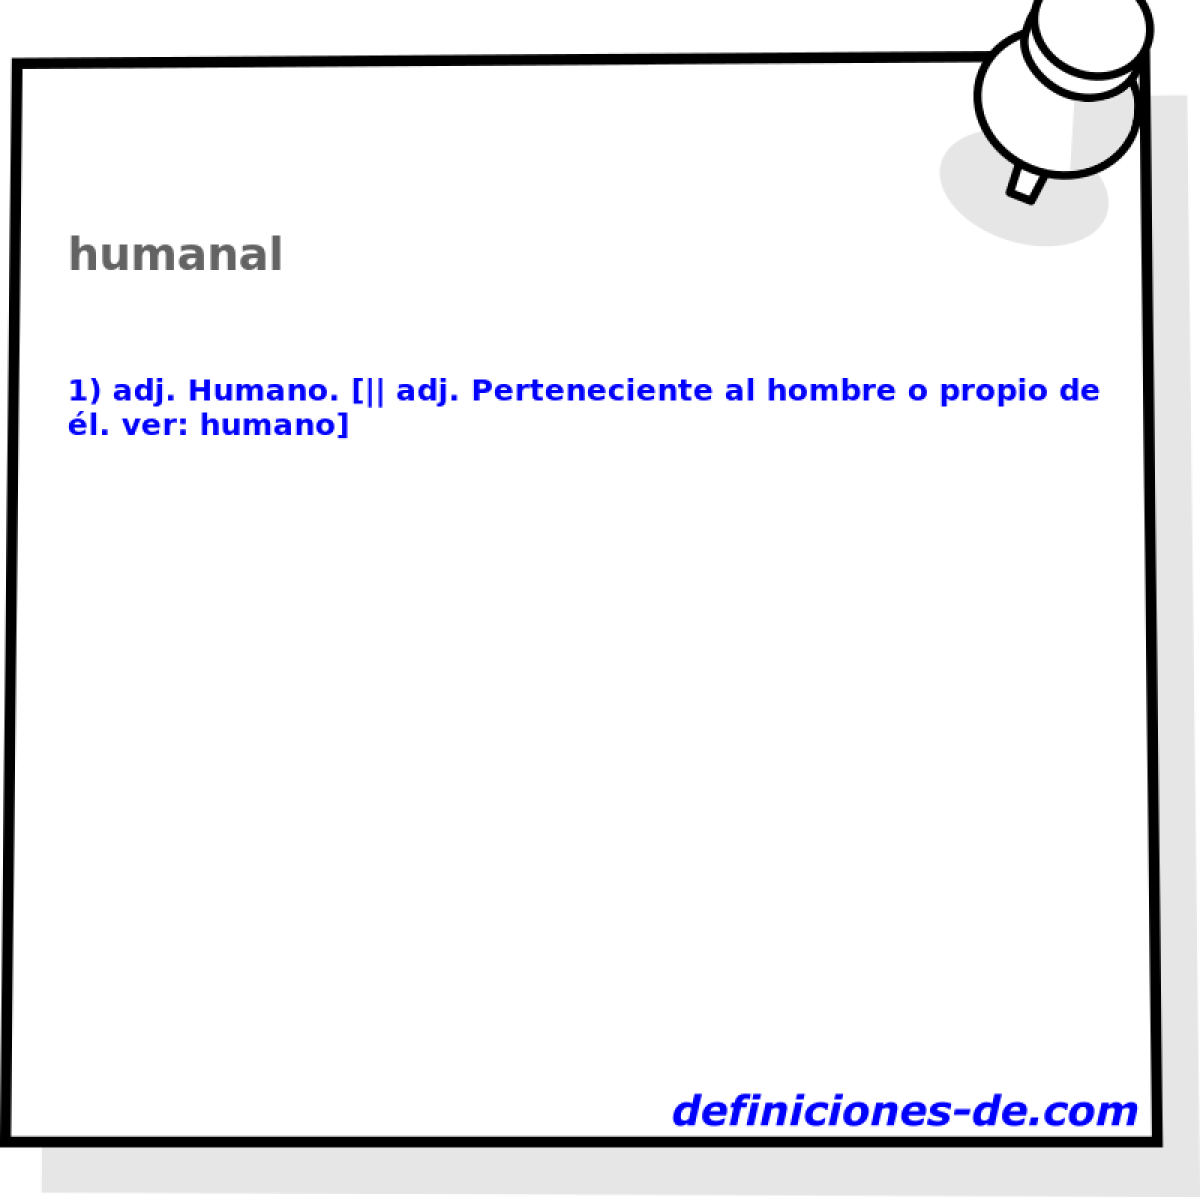 humanal 